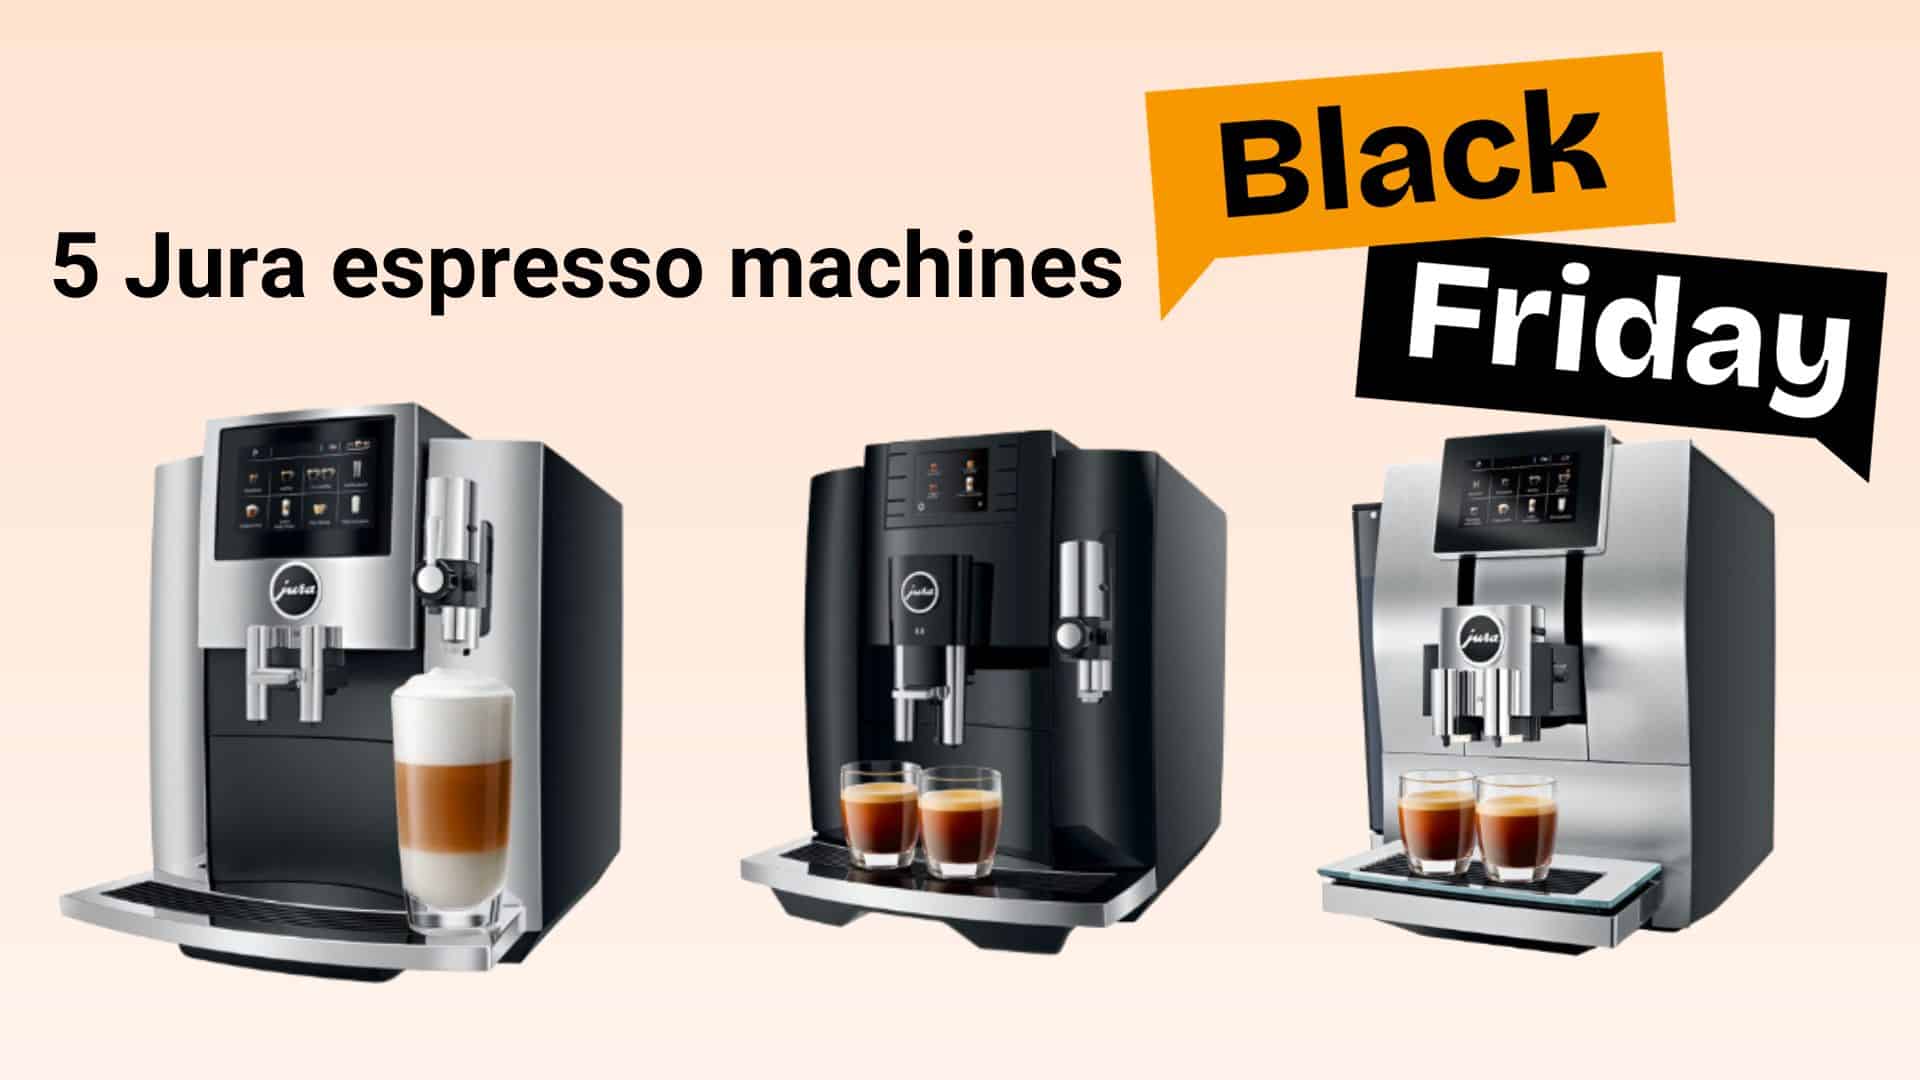 5 Jura espresso machines – black friday sales